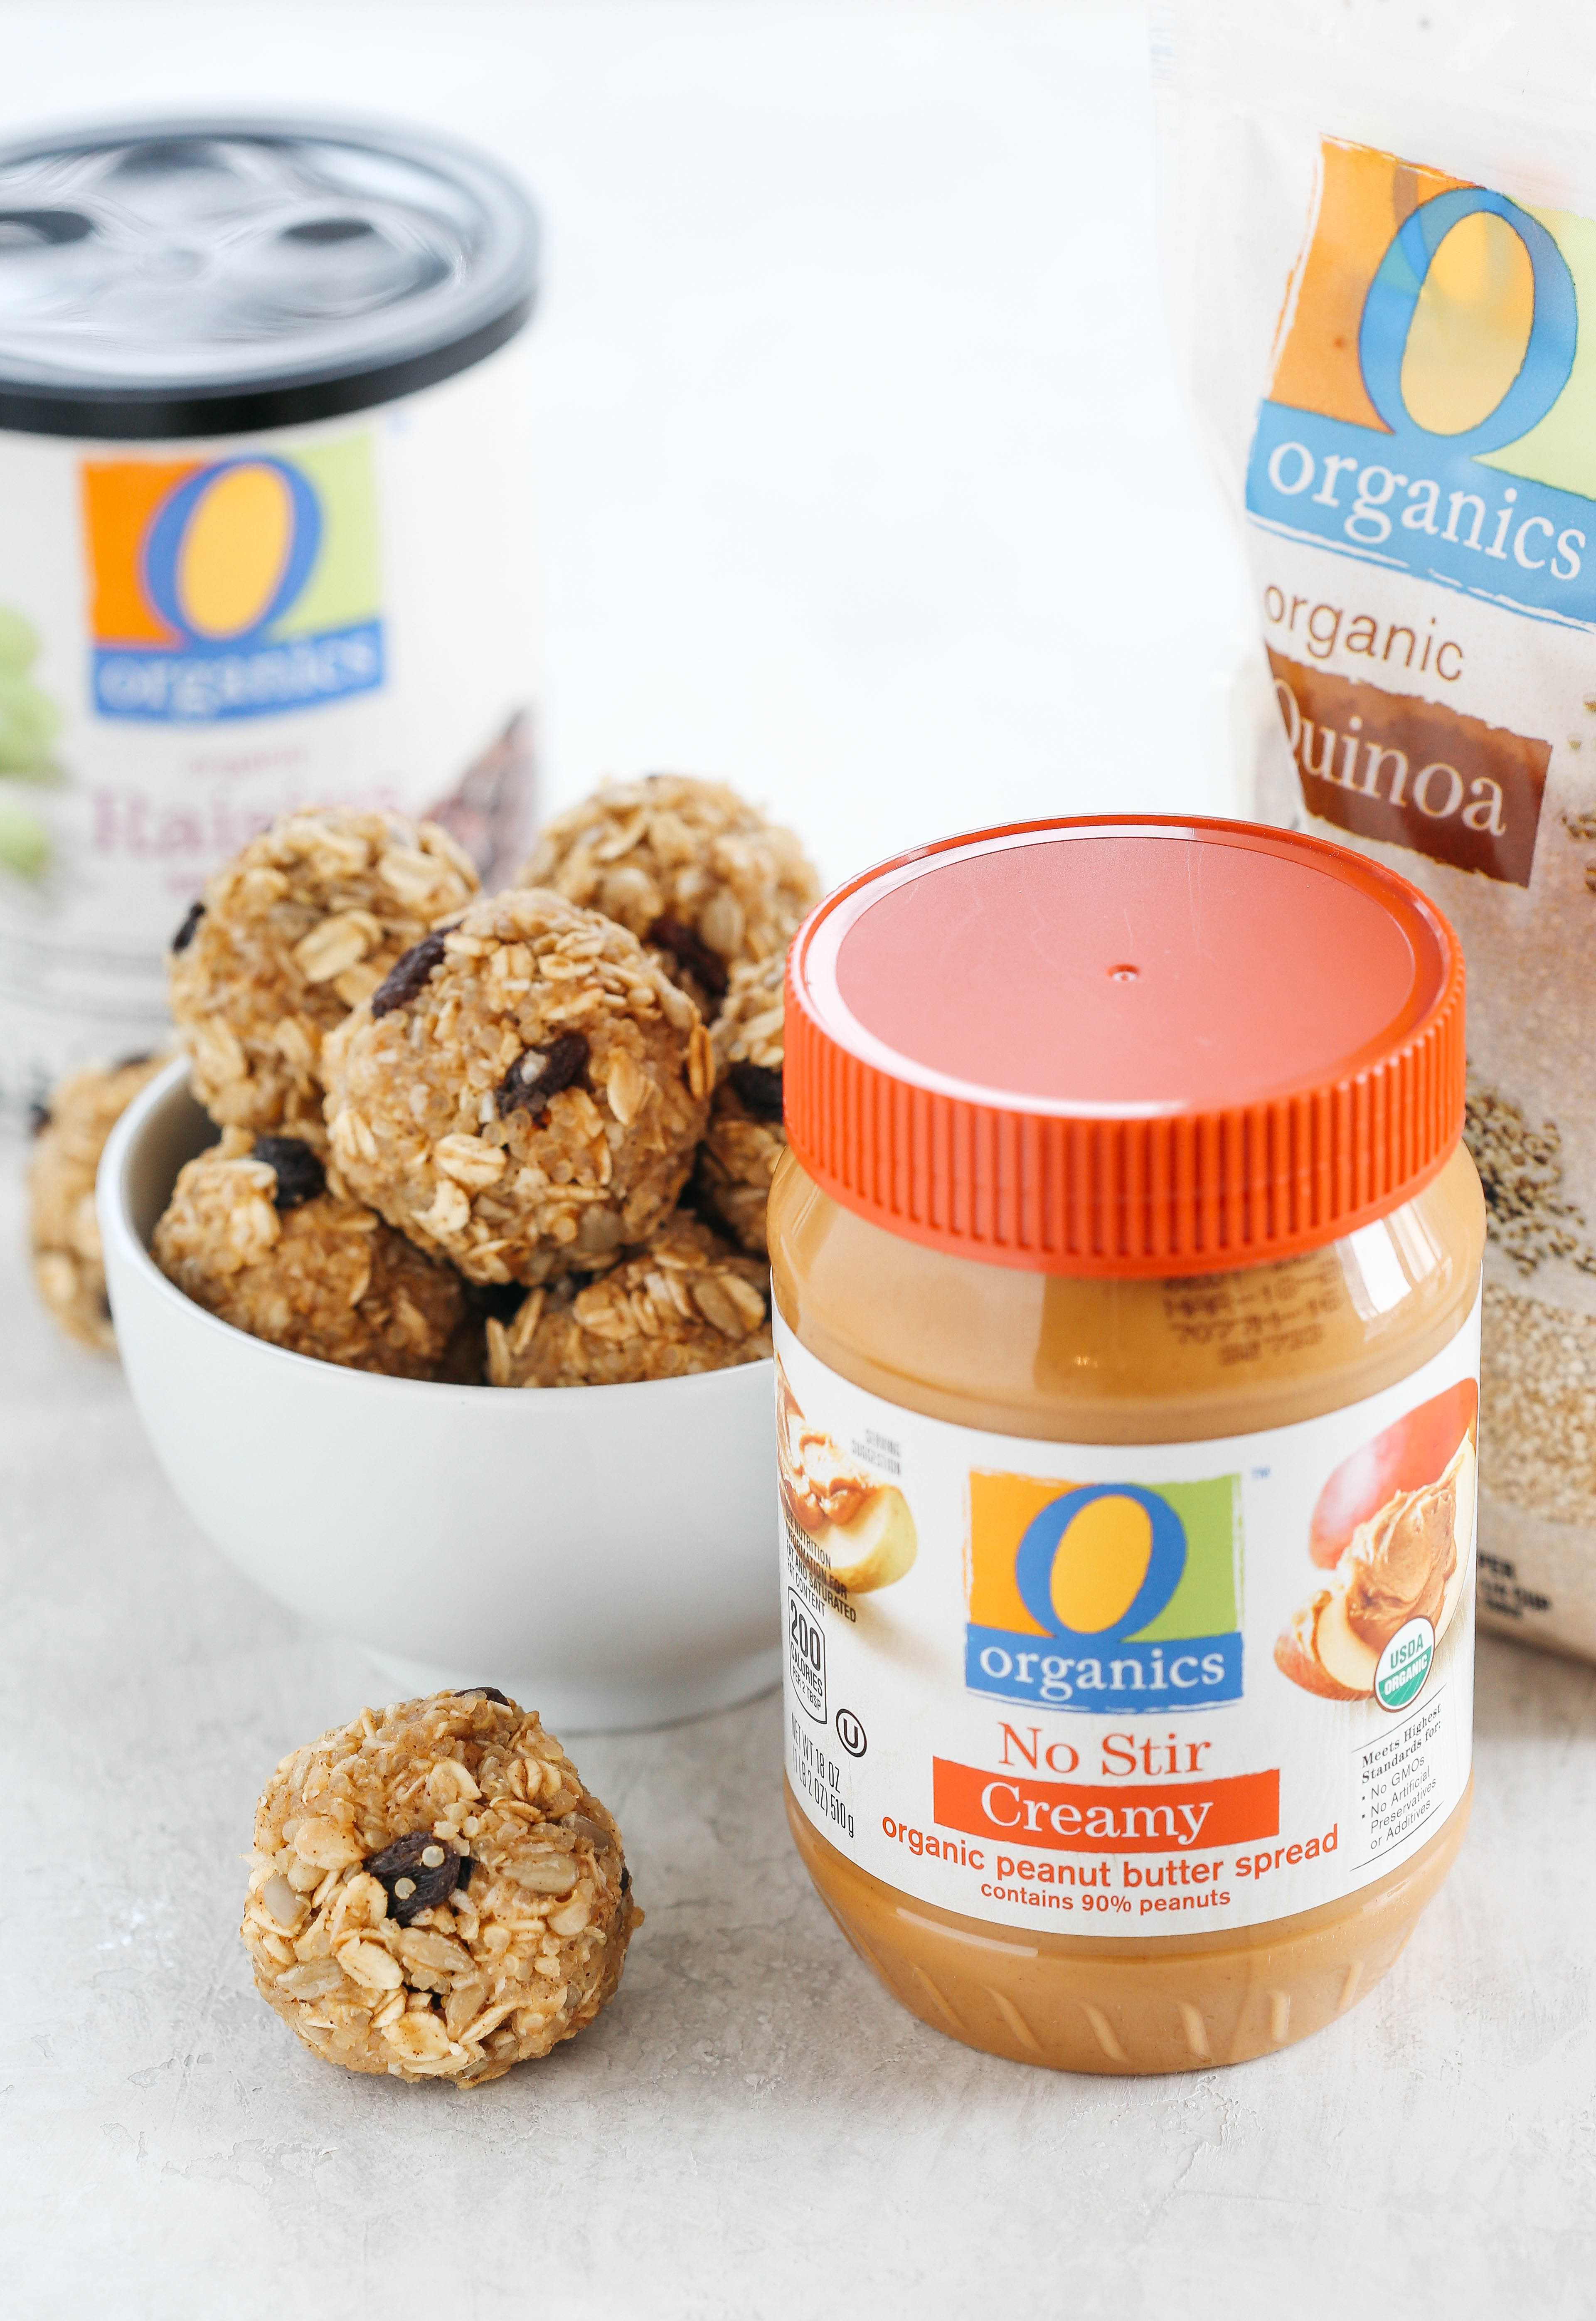 No Bake Peanut Butter Quinoa Energy Balls #vegan #glutenfree #dairyfree